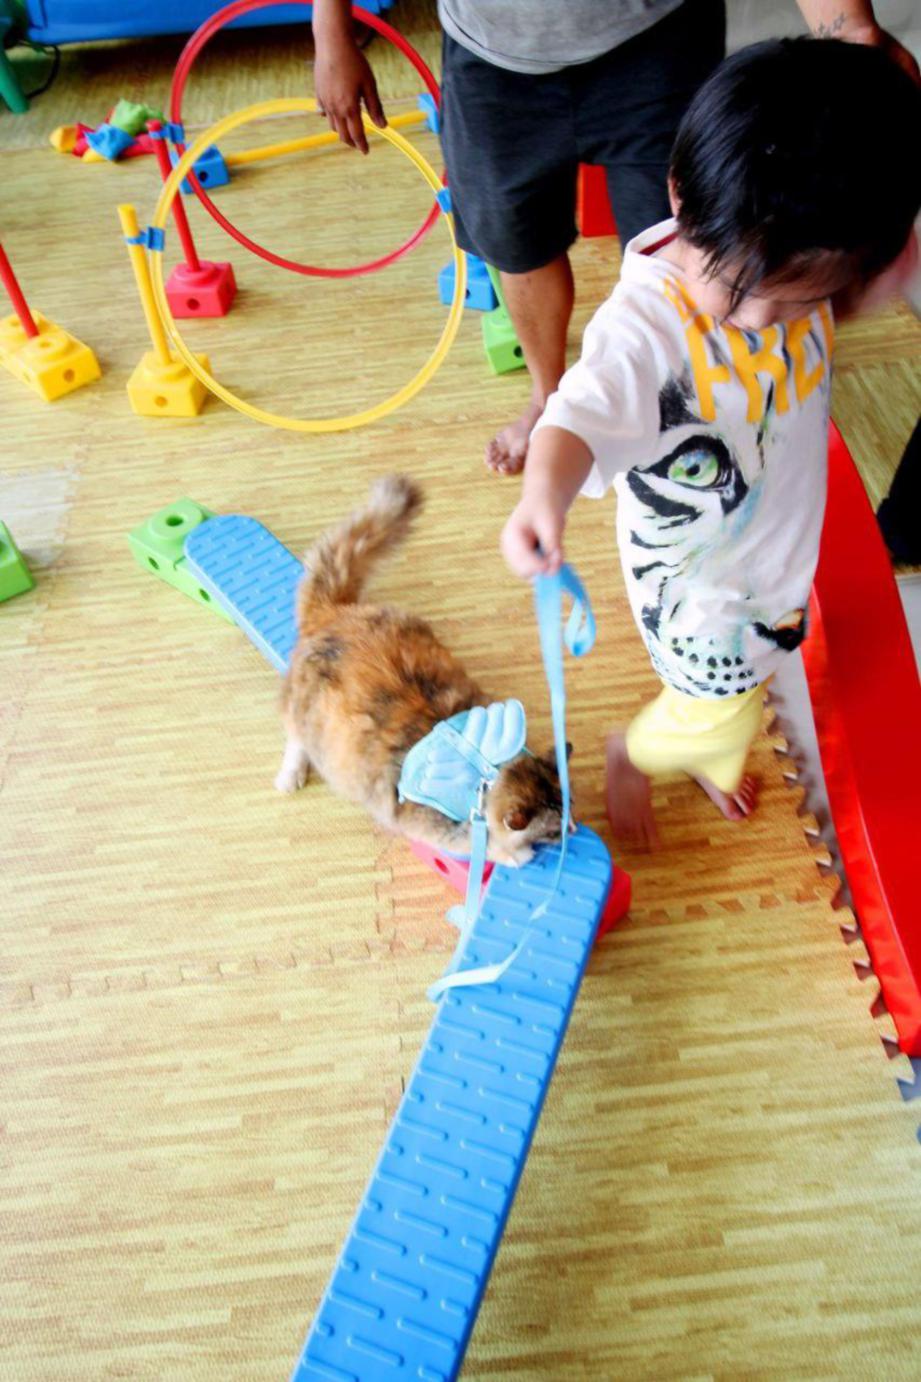 KEHADIRAN haiwan comel seperti kucing menjadikan pelajar lebih teruja dalam sesi terapi di Animals For Young.